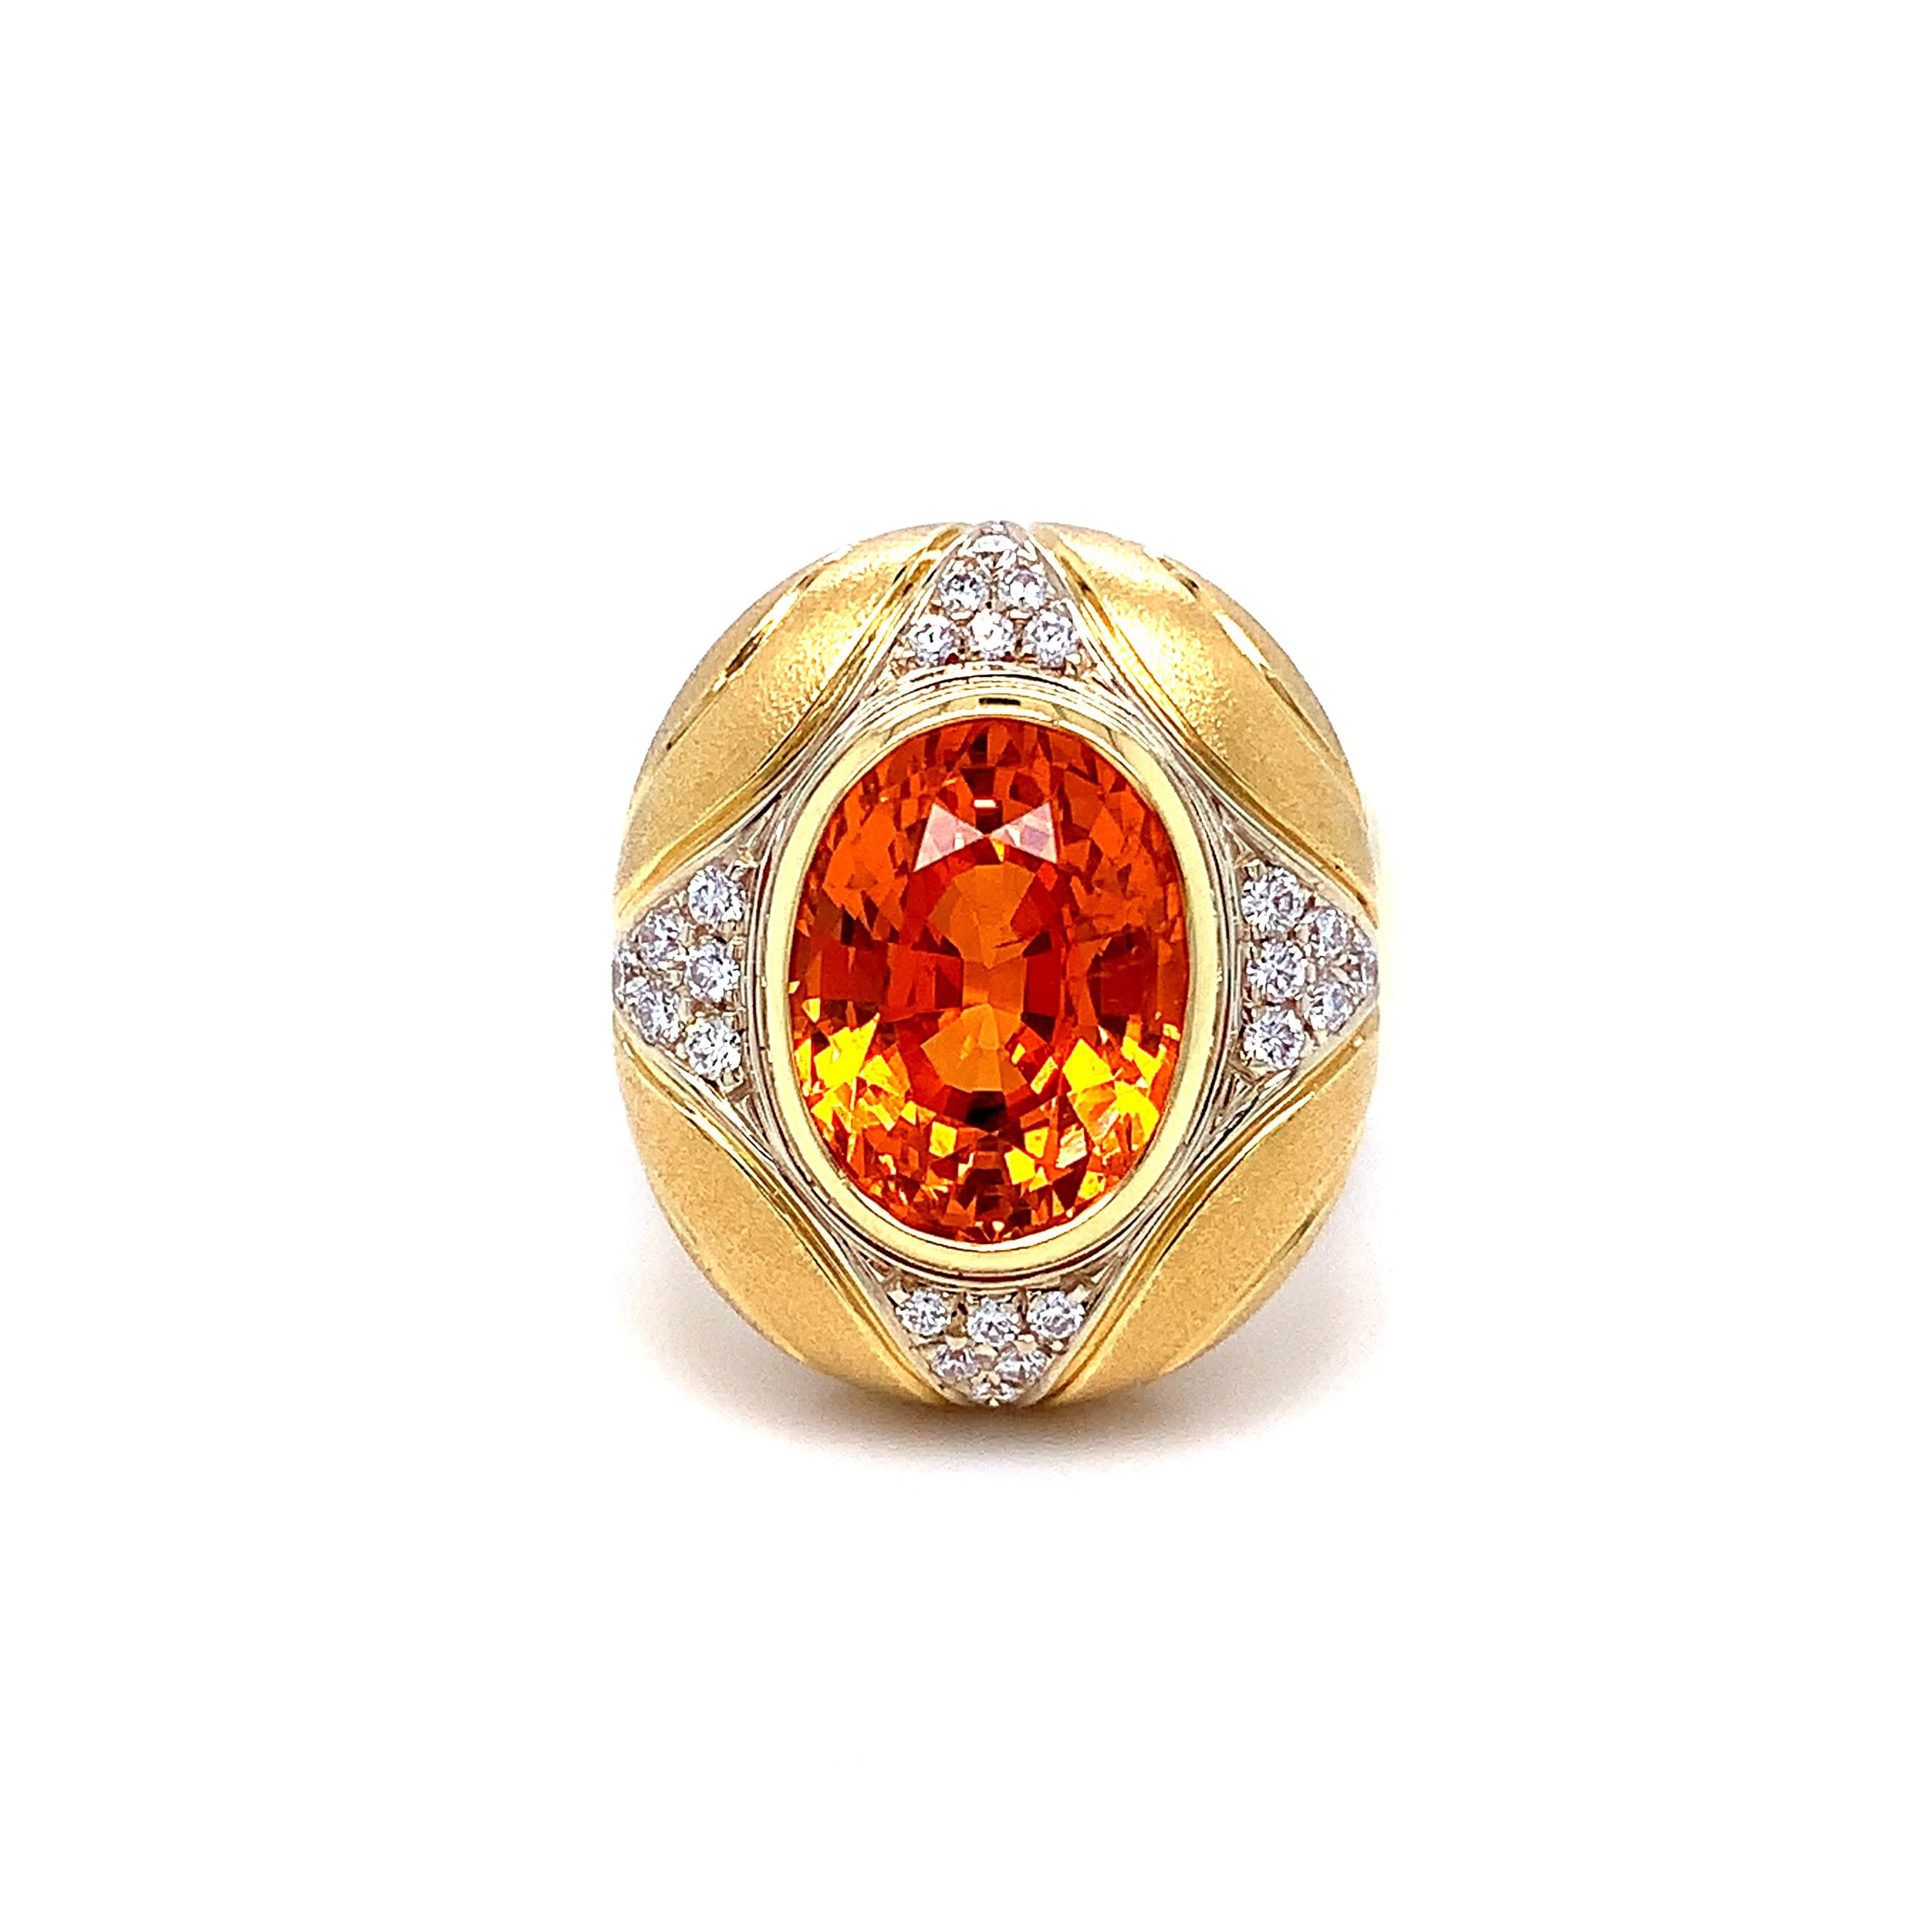 Oval Cut Spessartite Garnet and Diamond Pave Dome Ring in 18k Gold, 8.16 Carat Mandarin